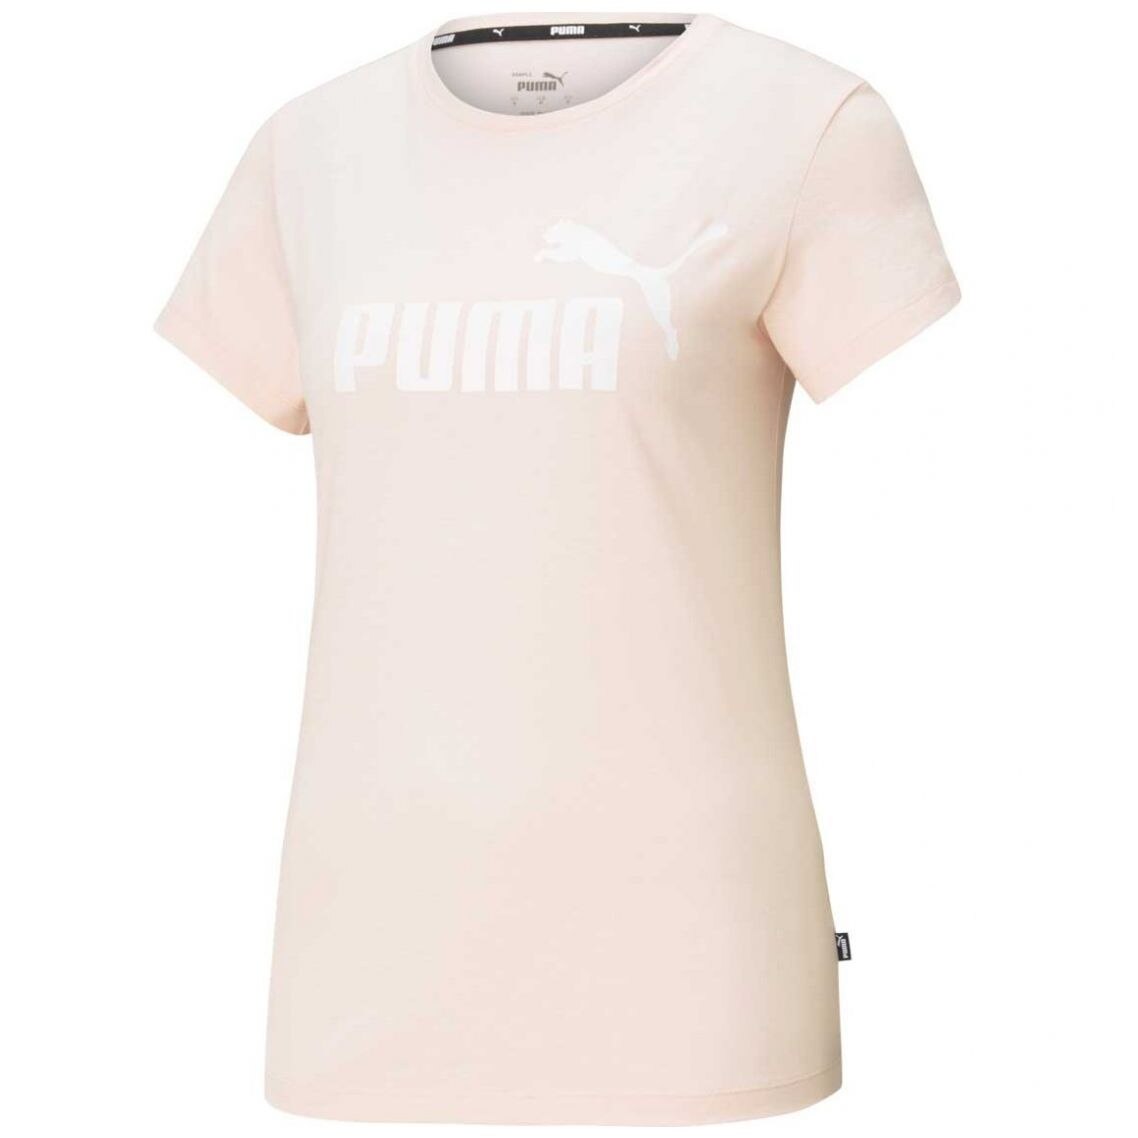 Playera Puma para Mujer